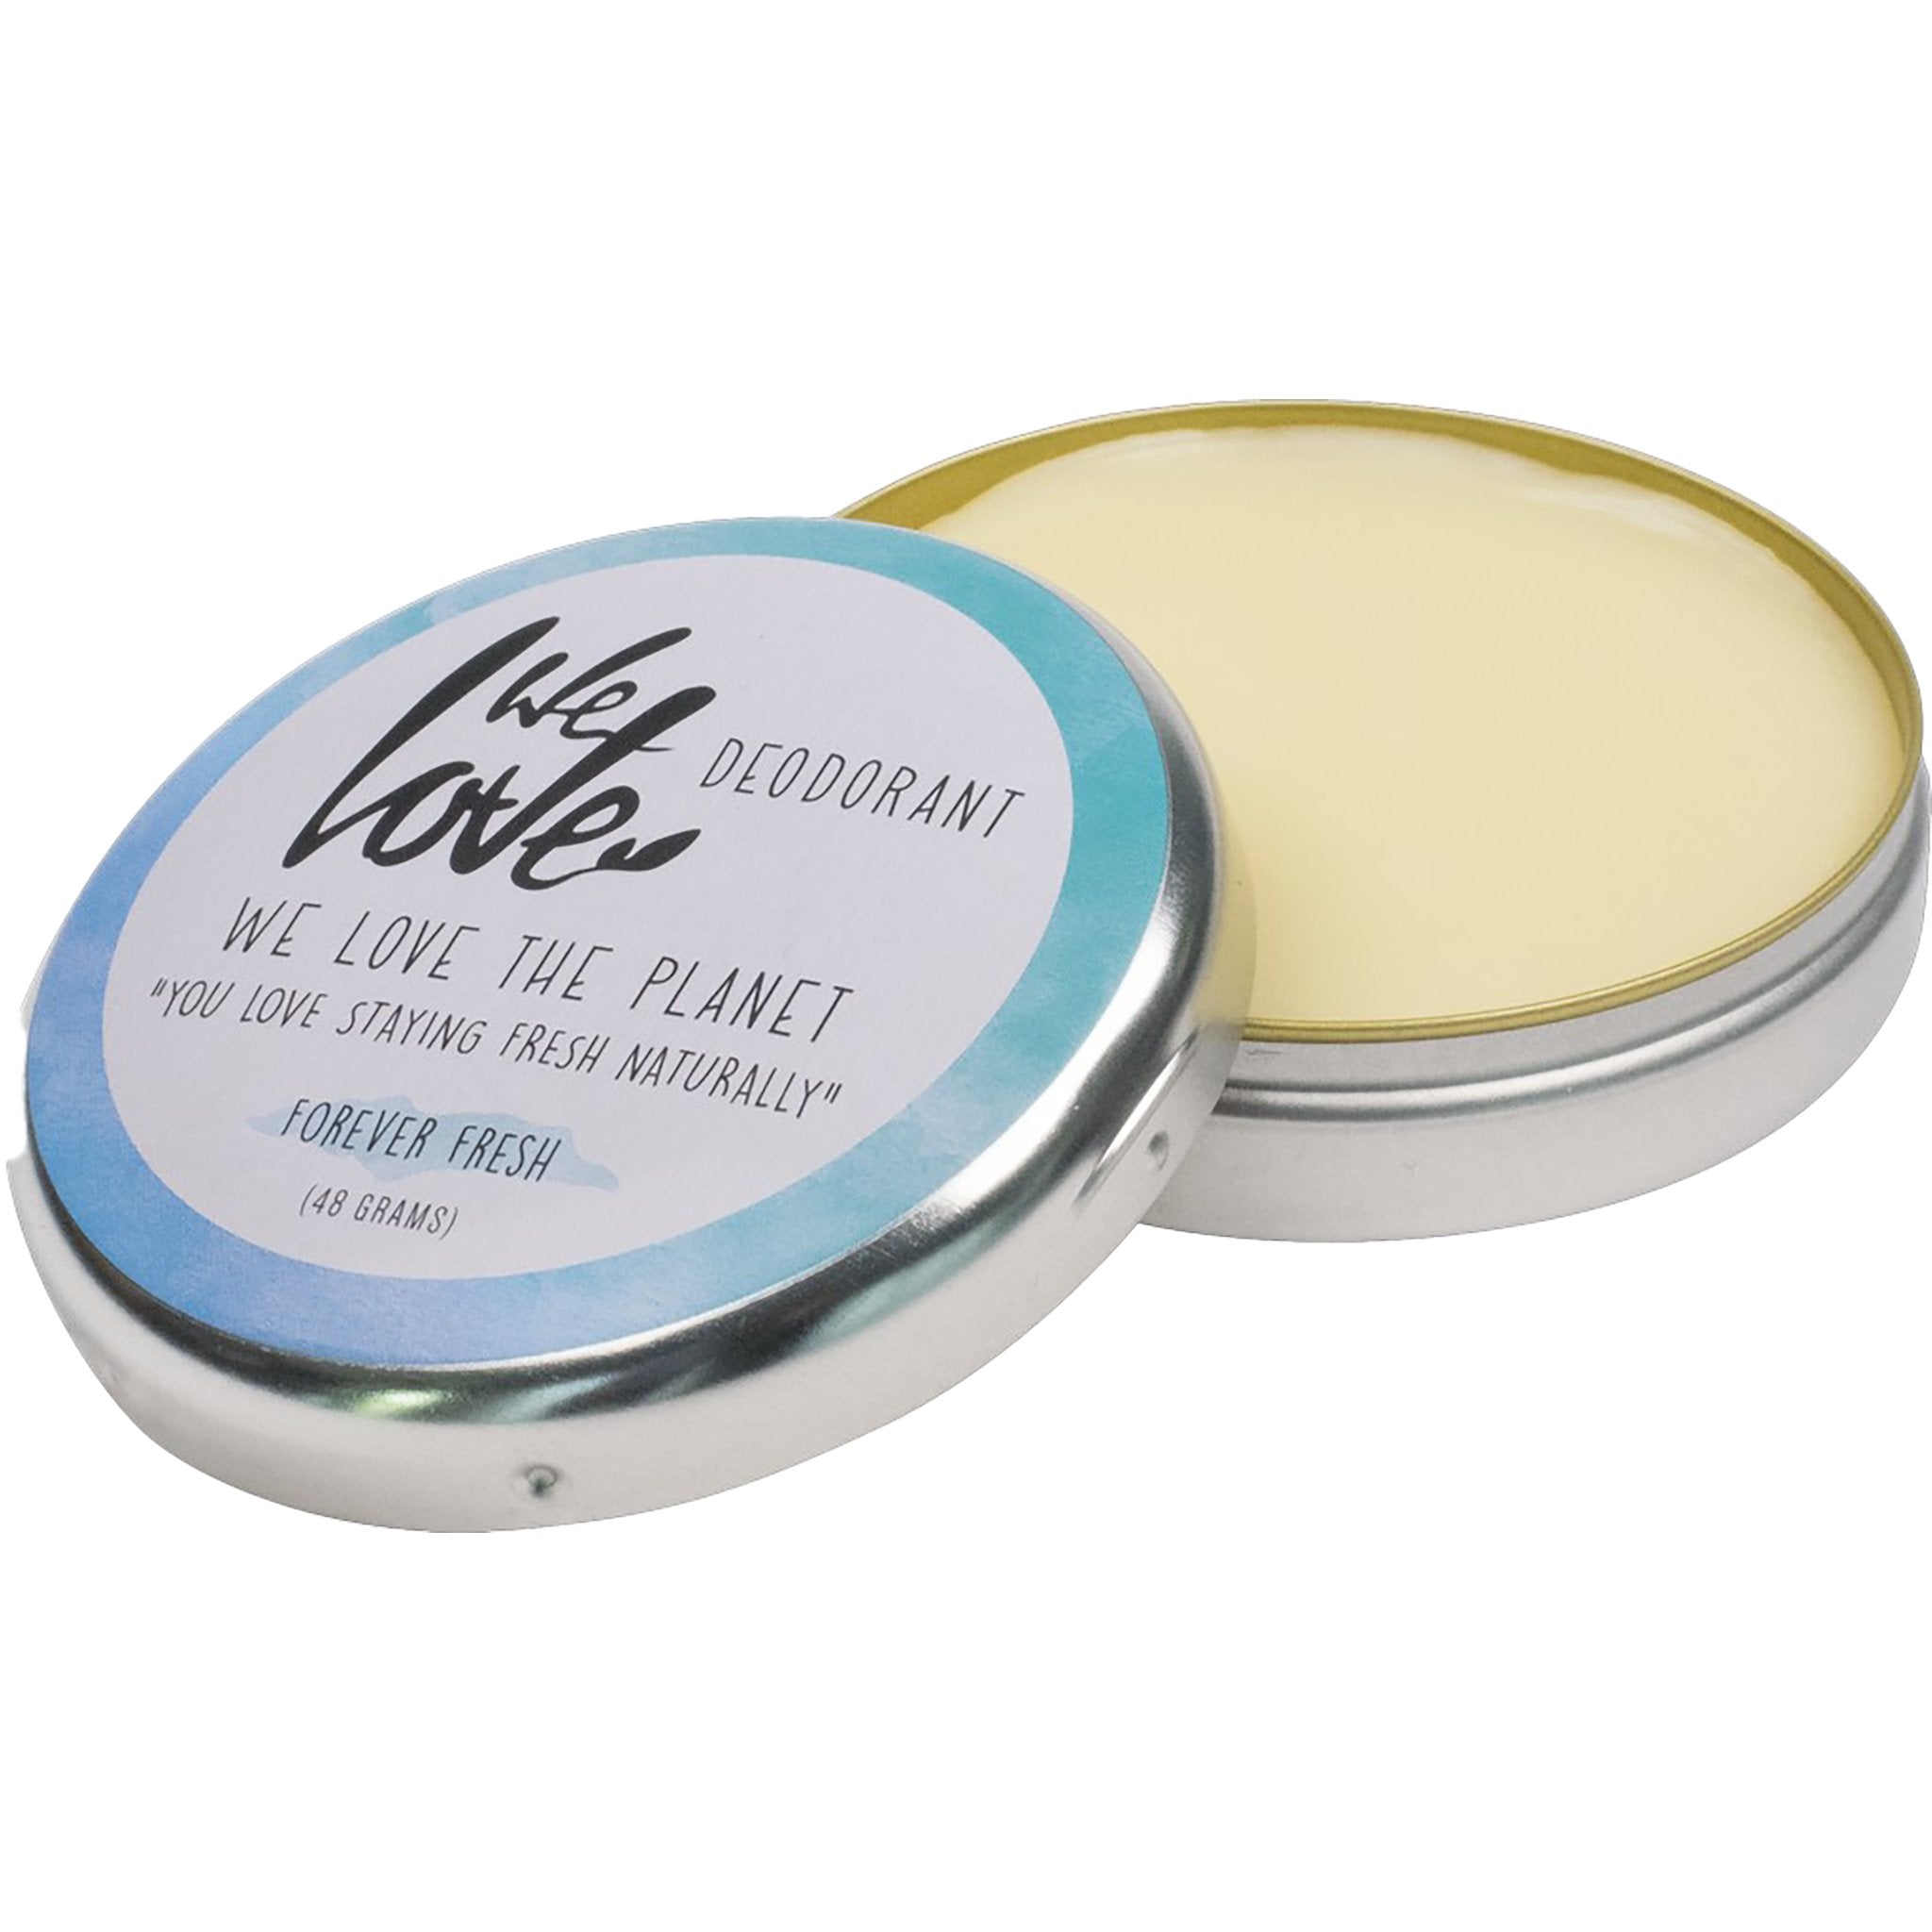 Natural Deodorant Cream | Forever Fresh - mypure.co.uk